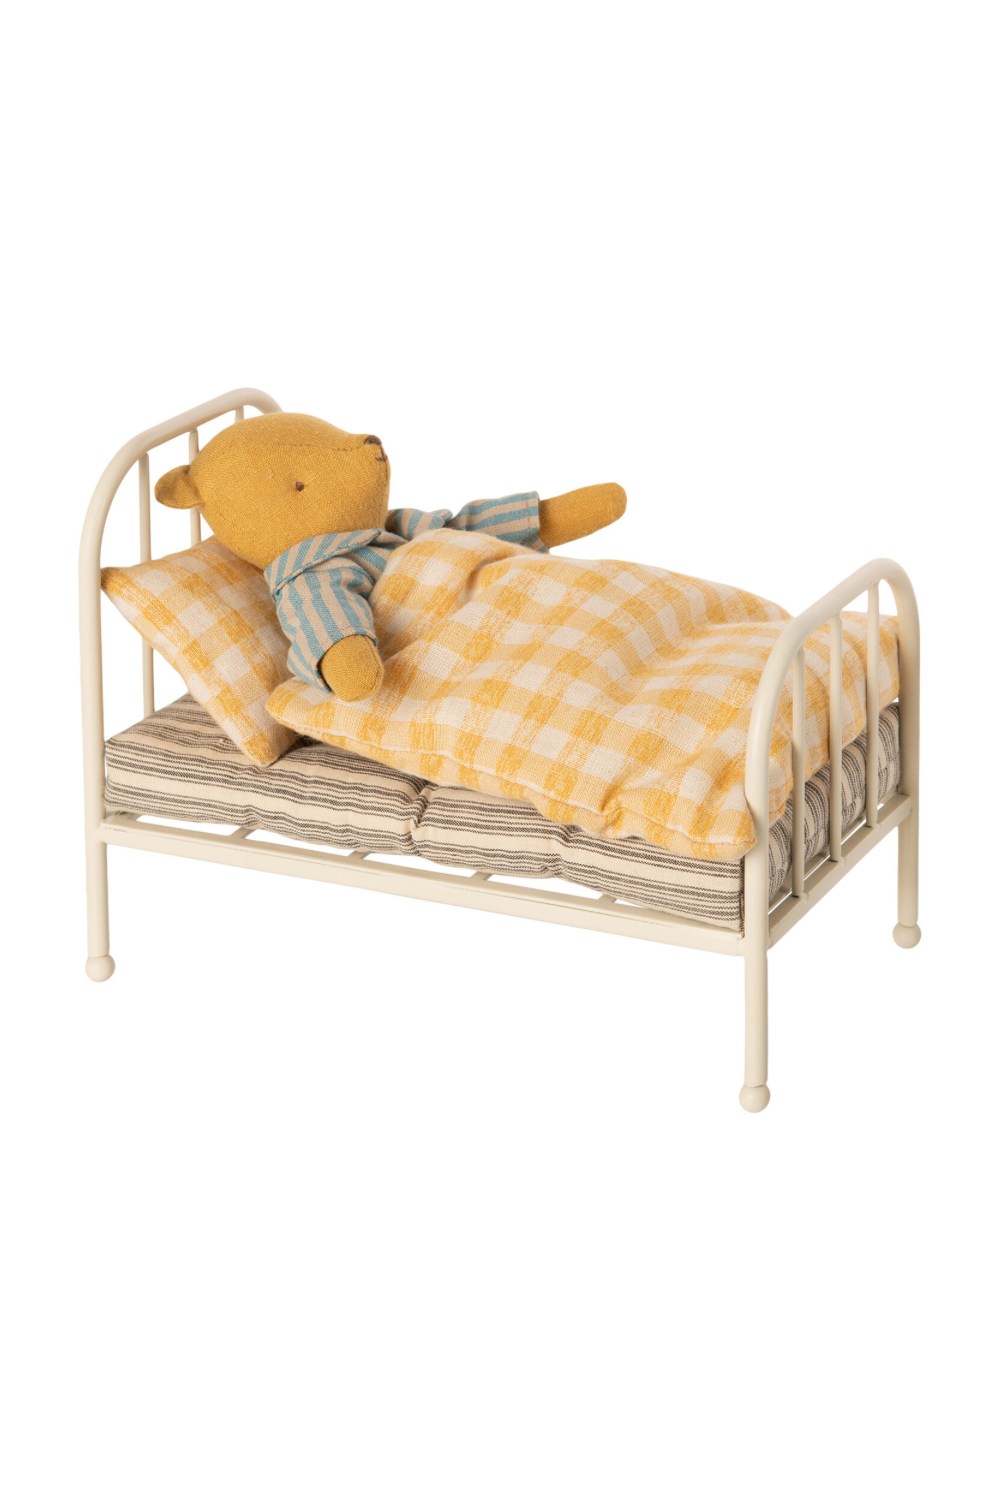 Vintage Teddy Junior Bed: Charming Plush Furniture for Kids